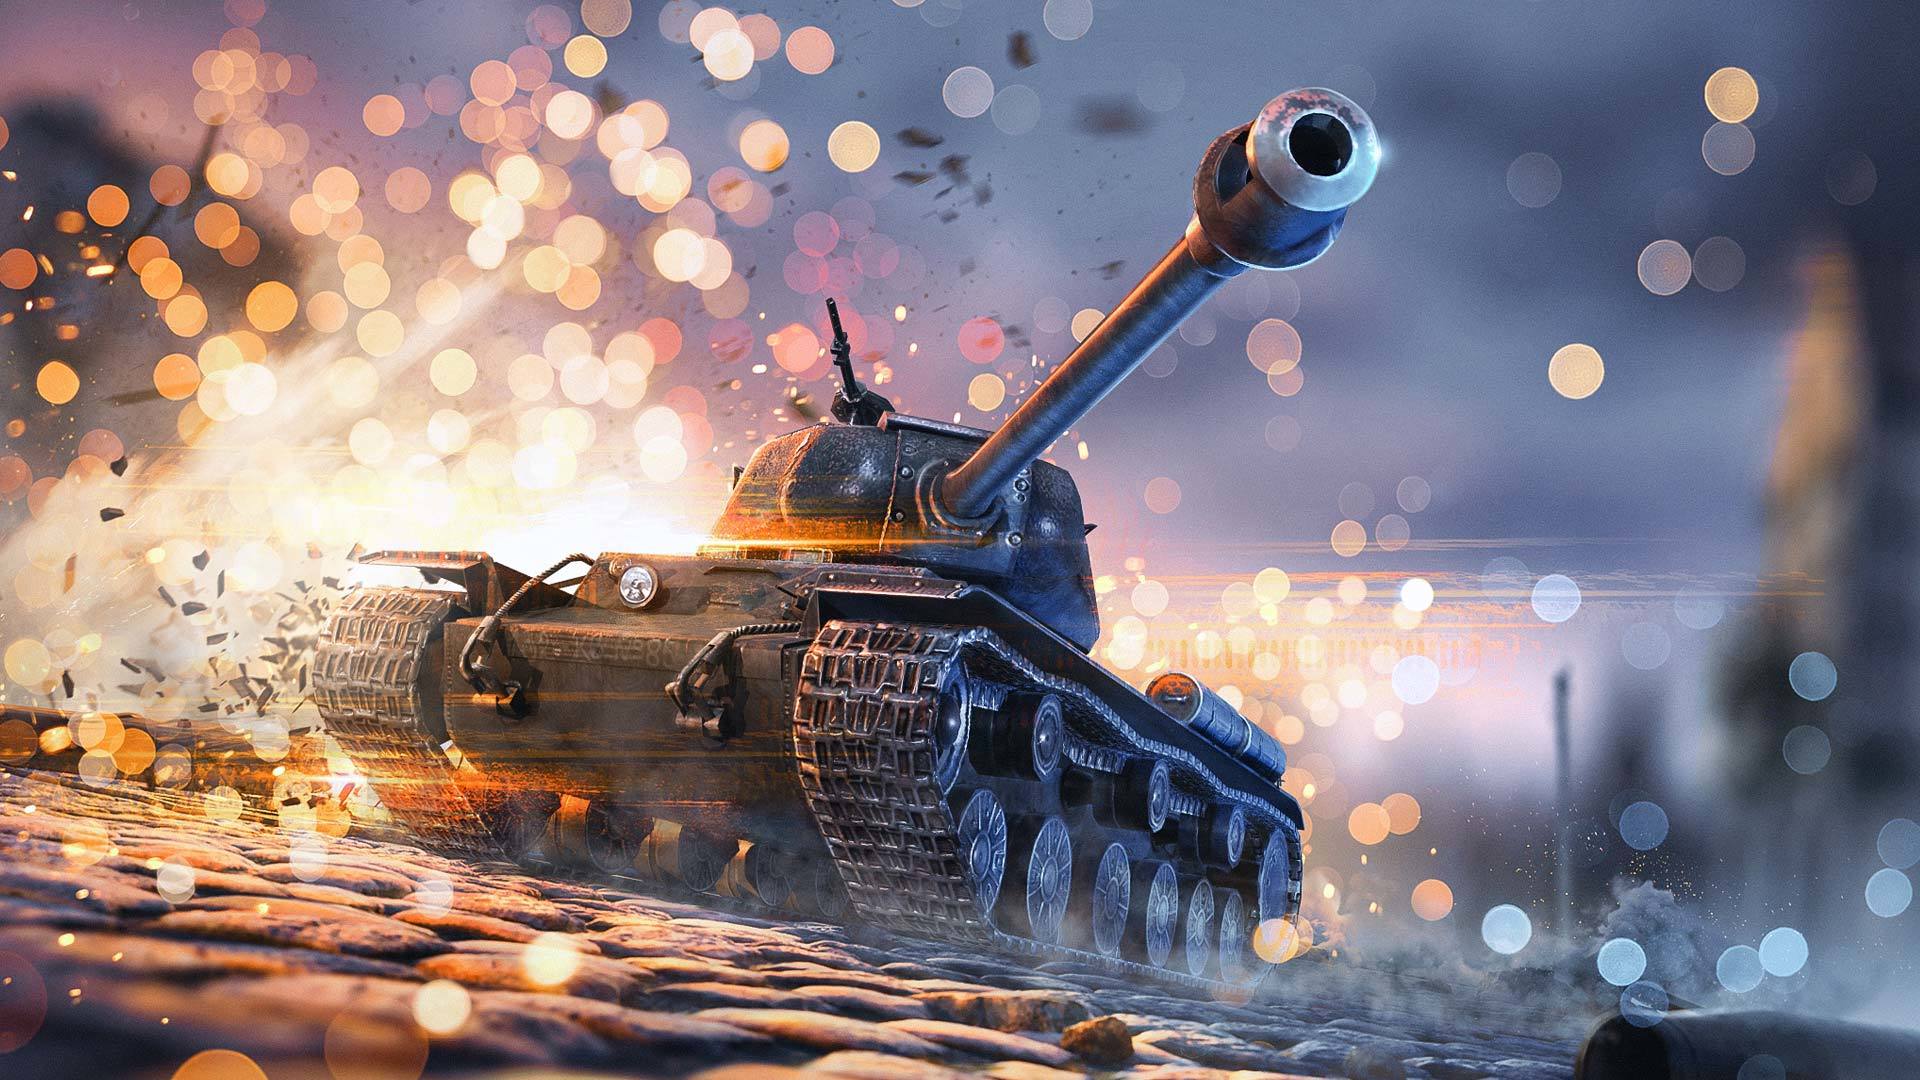 world of tanks blitz update 4.7